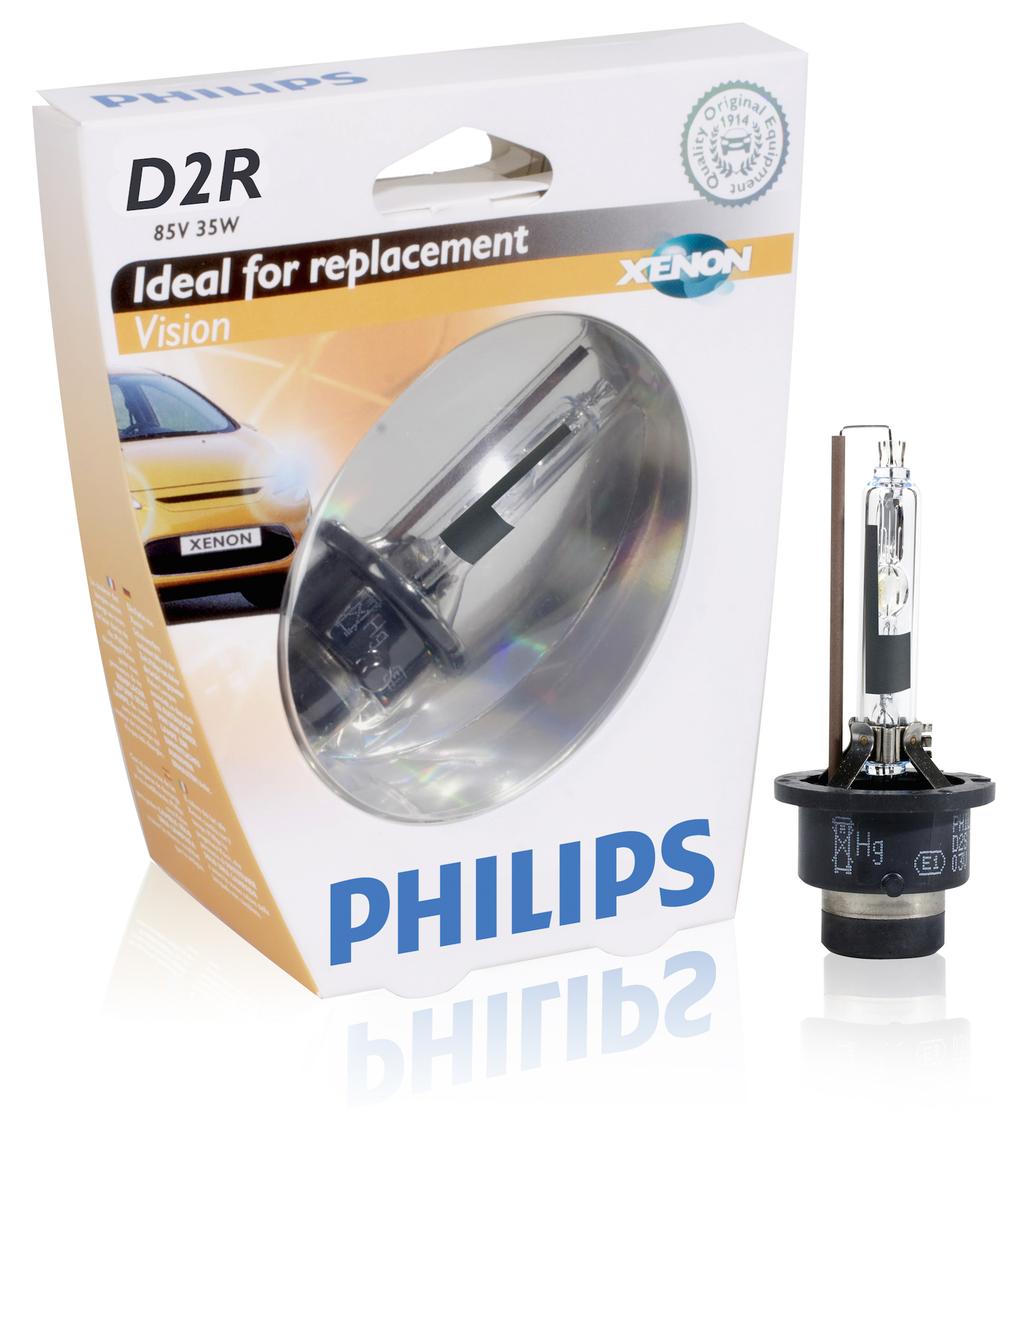 2017-07-20 PHILIPS D2R 85V 35W P32d-3 Vision Samochodowa lampa ksenonowa D2R Xenon Vision marki Philips.